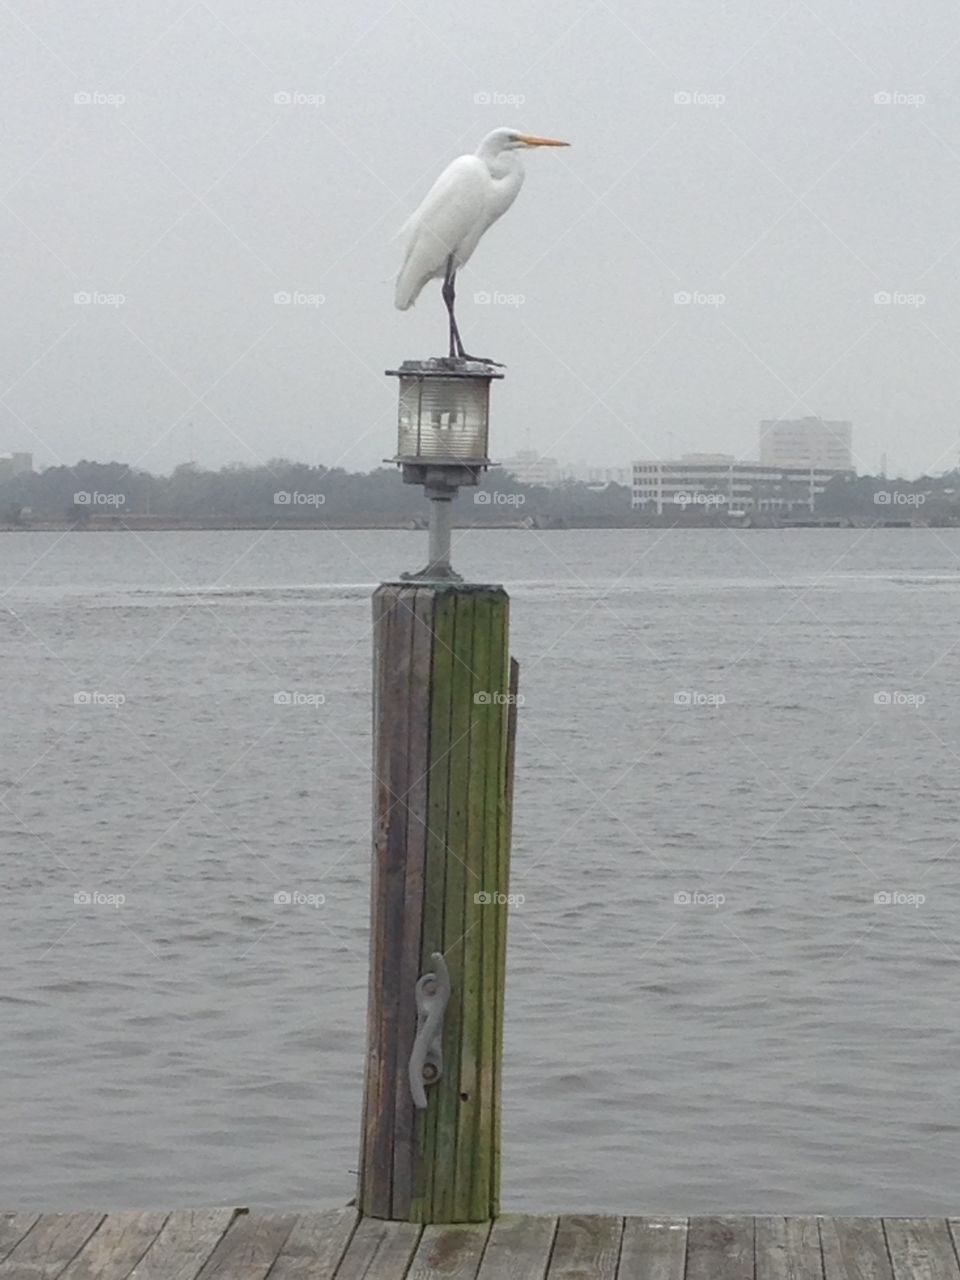 White Crane in Jacksonville Florida. White crane standing on a pier post in Jacksonville Florida